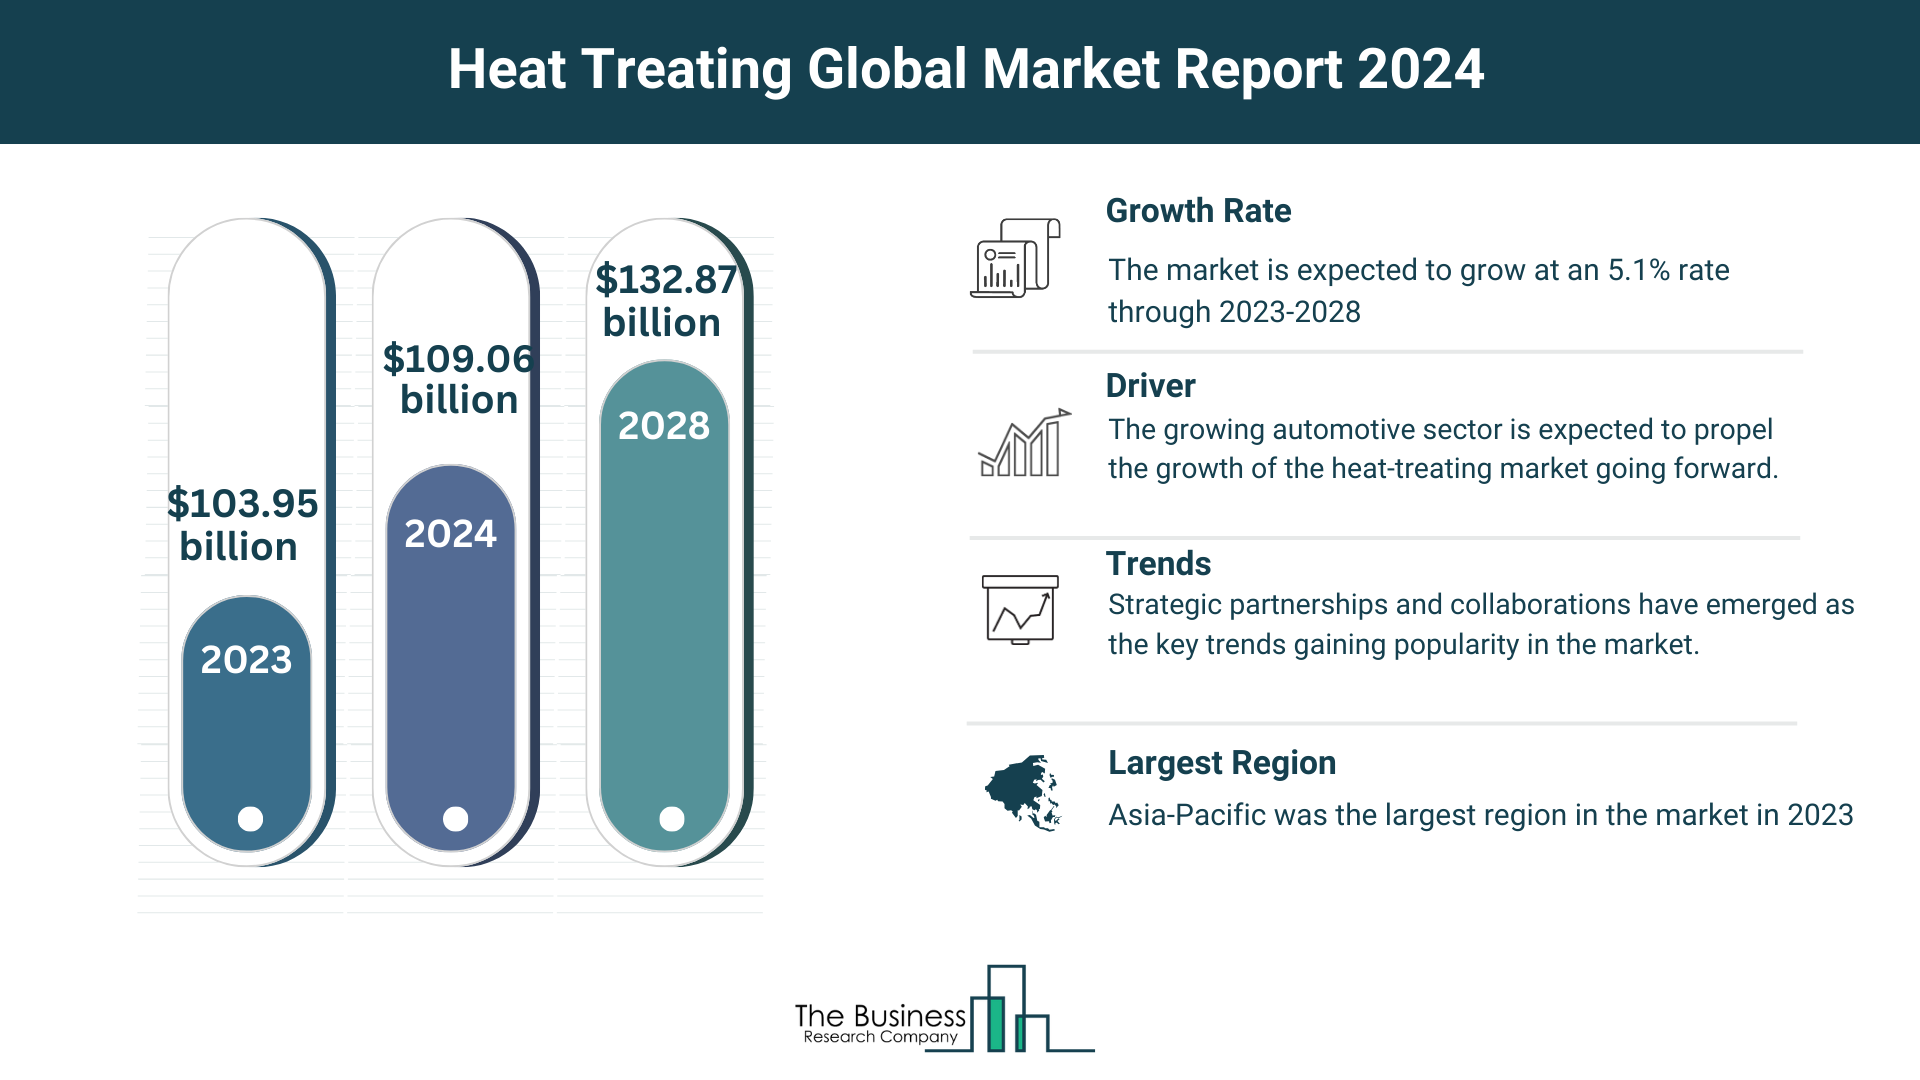 Global Heat Treating Market